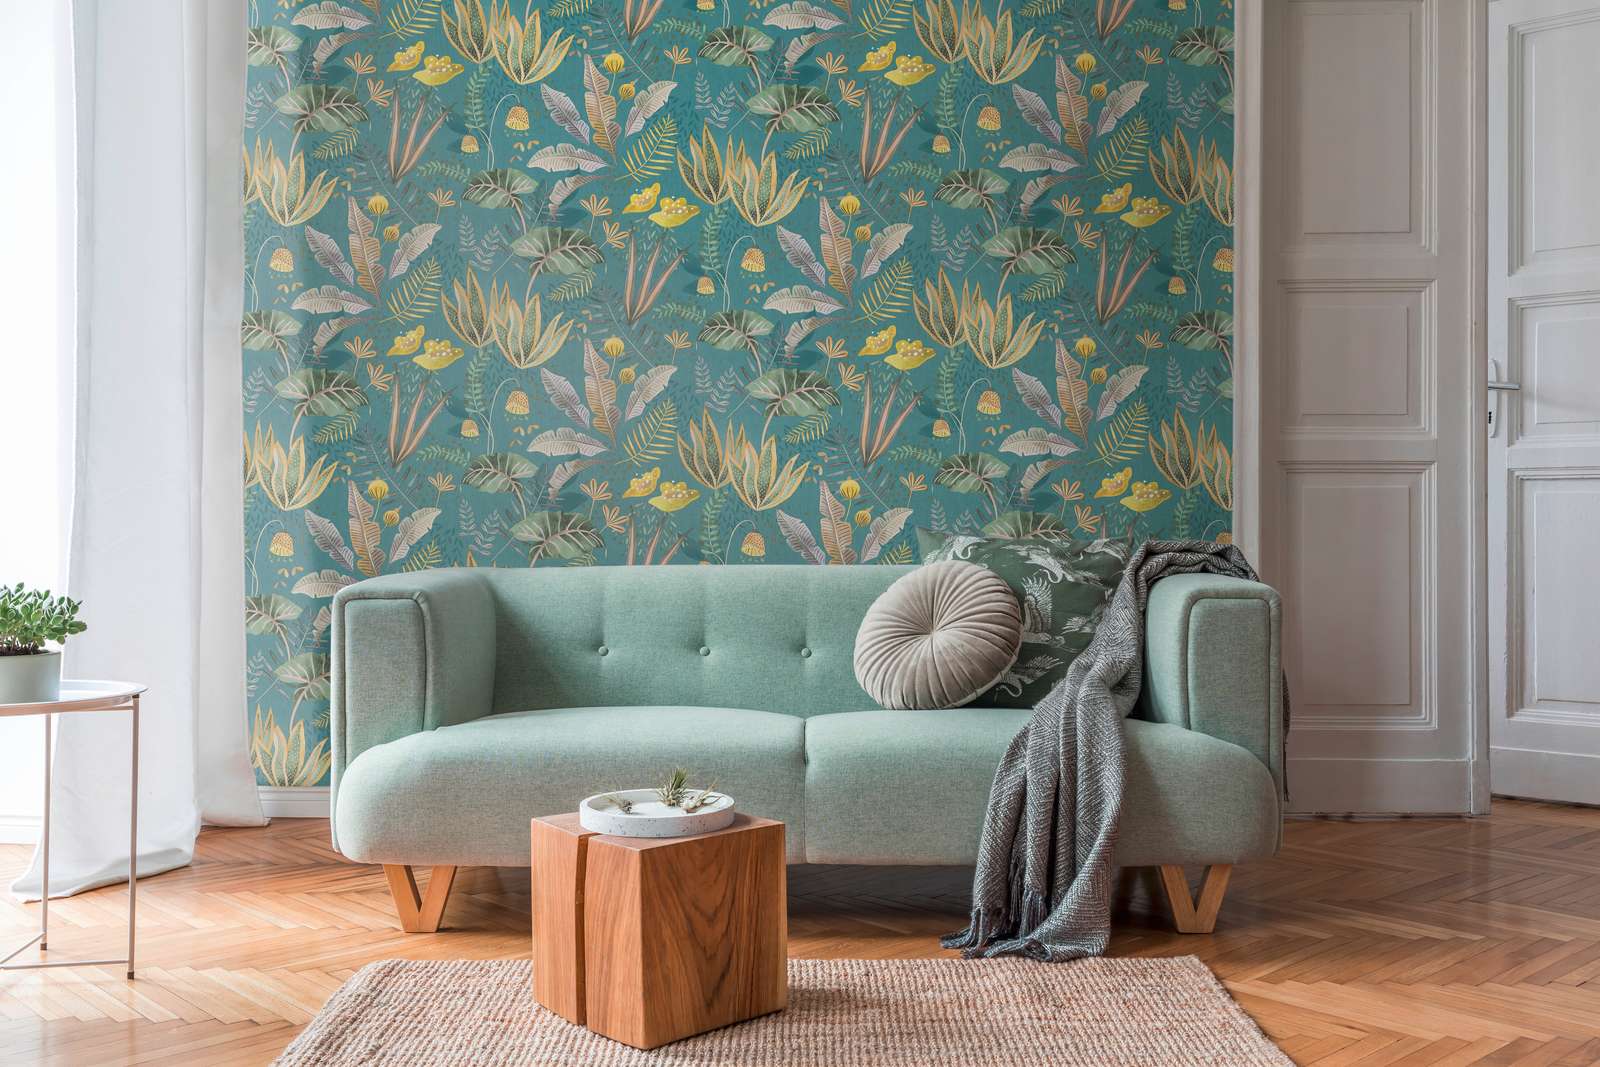             Non-woven wallpaper floral with mixed leaves light textured, matt - petrol, green, yellow
        